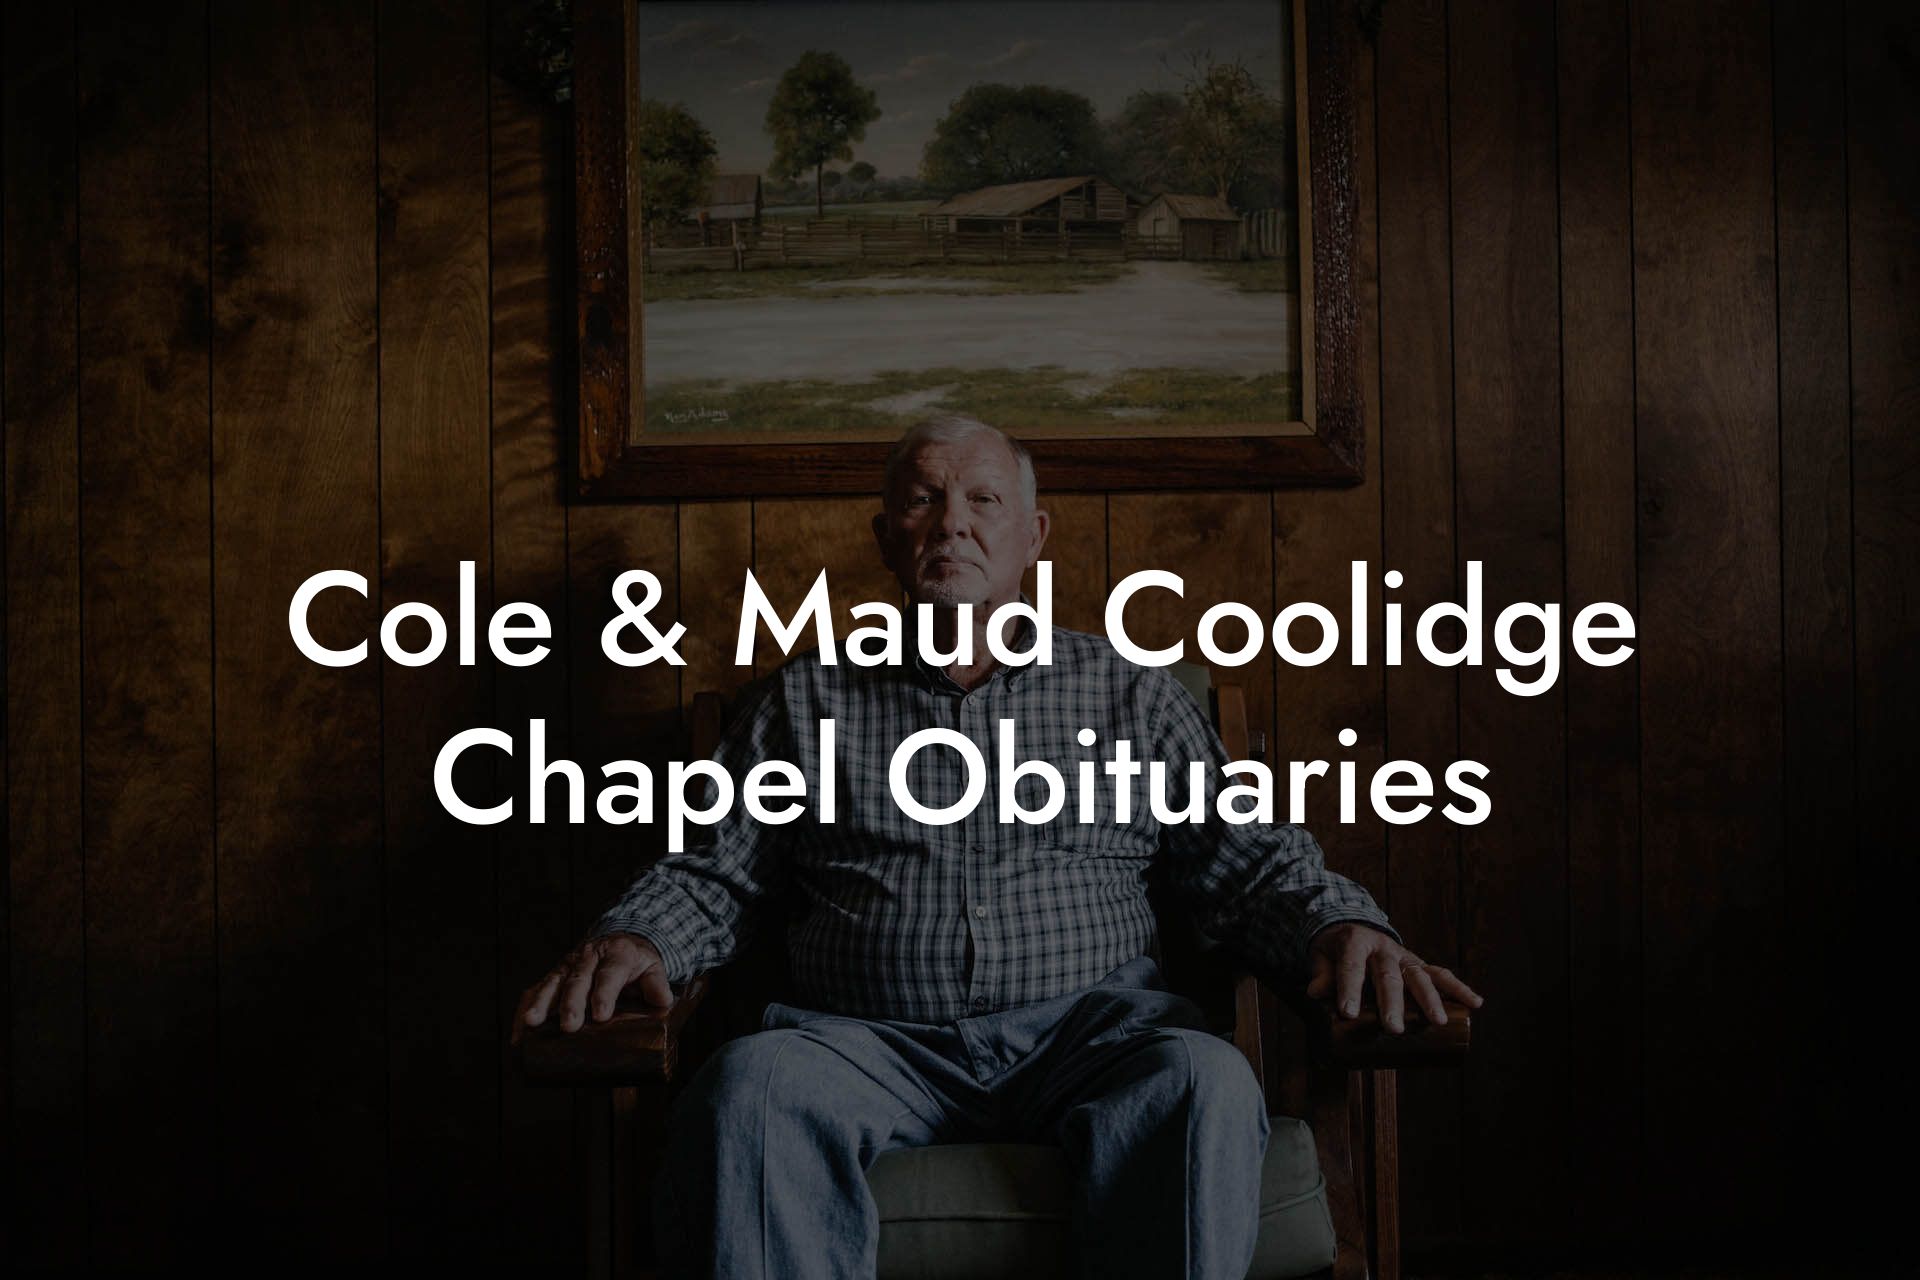 Cole & Maud Coolidge Chapel Obituaries